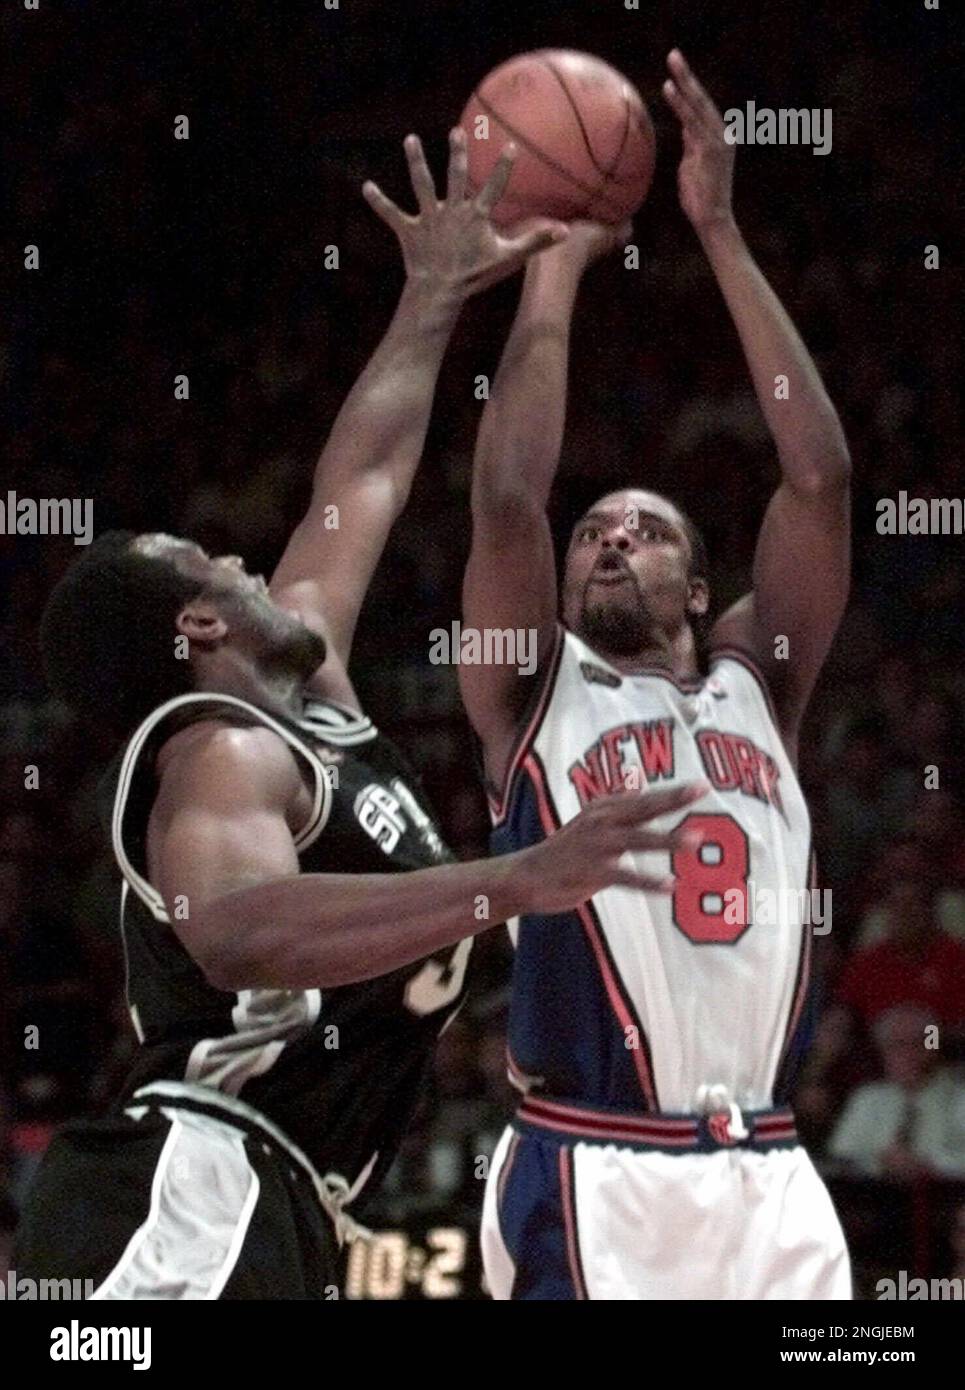 1999 NBA Finals: San Antonio Spurs vs. New York Knicks (Full